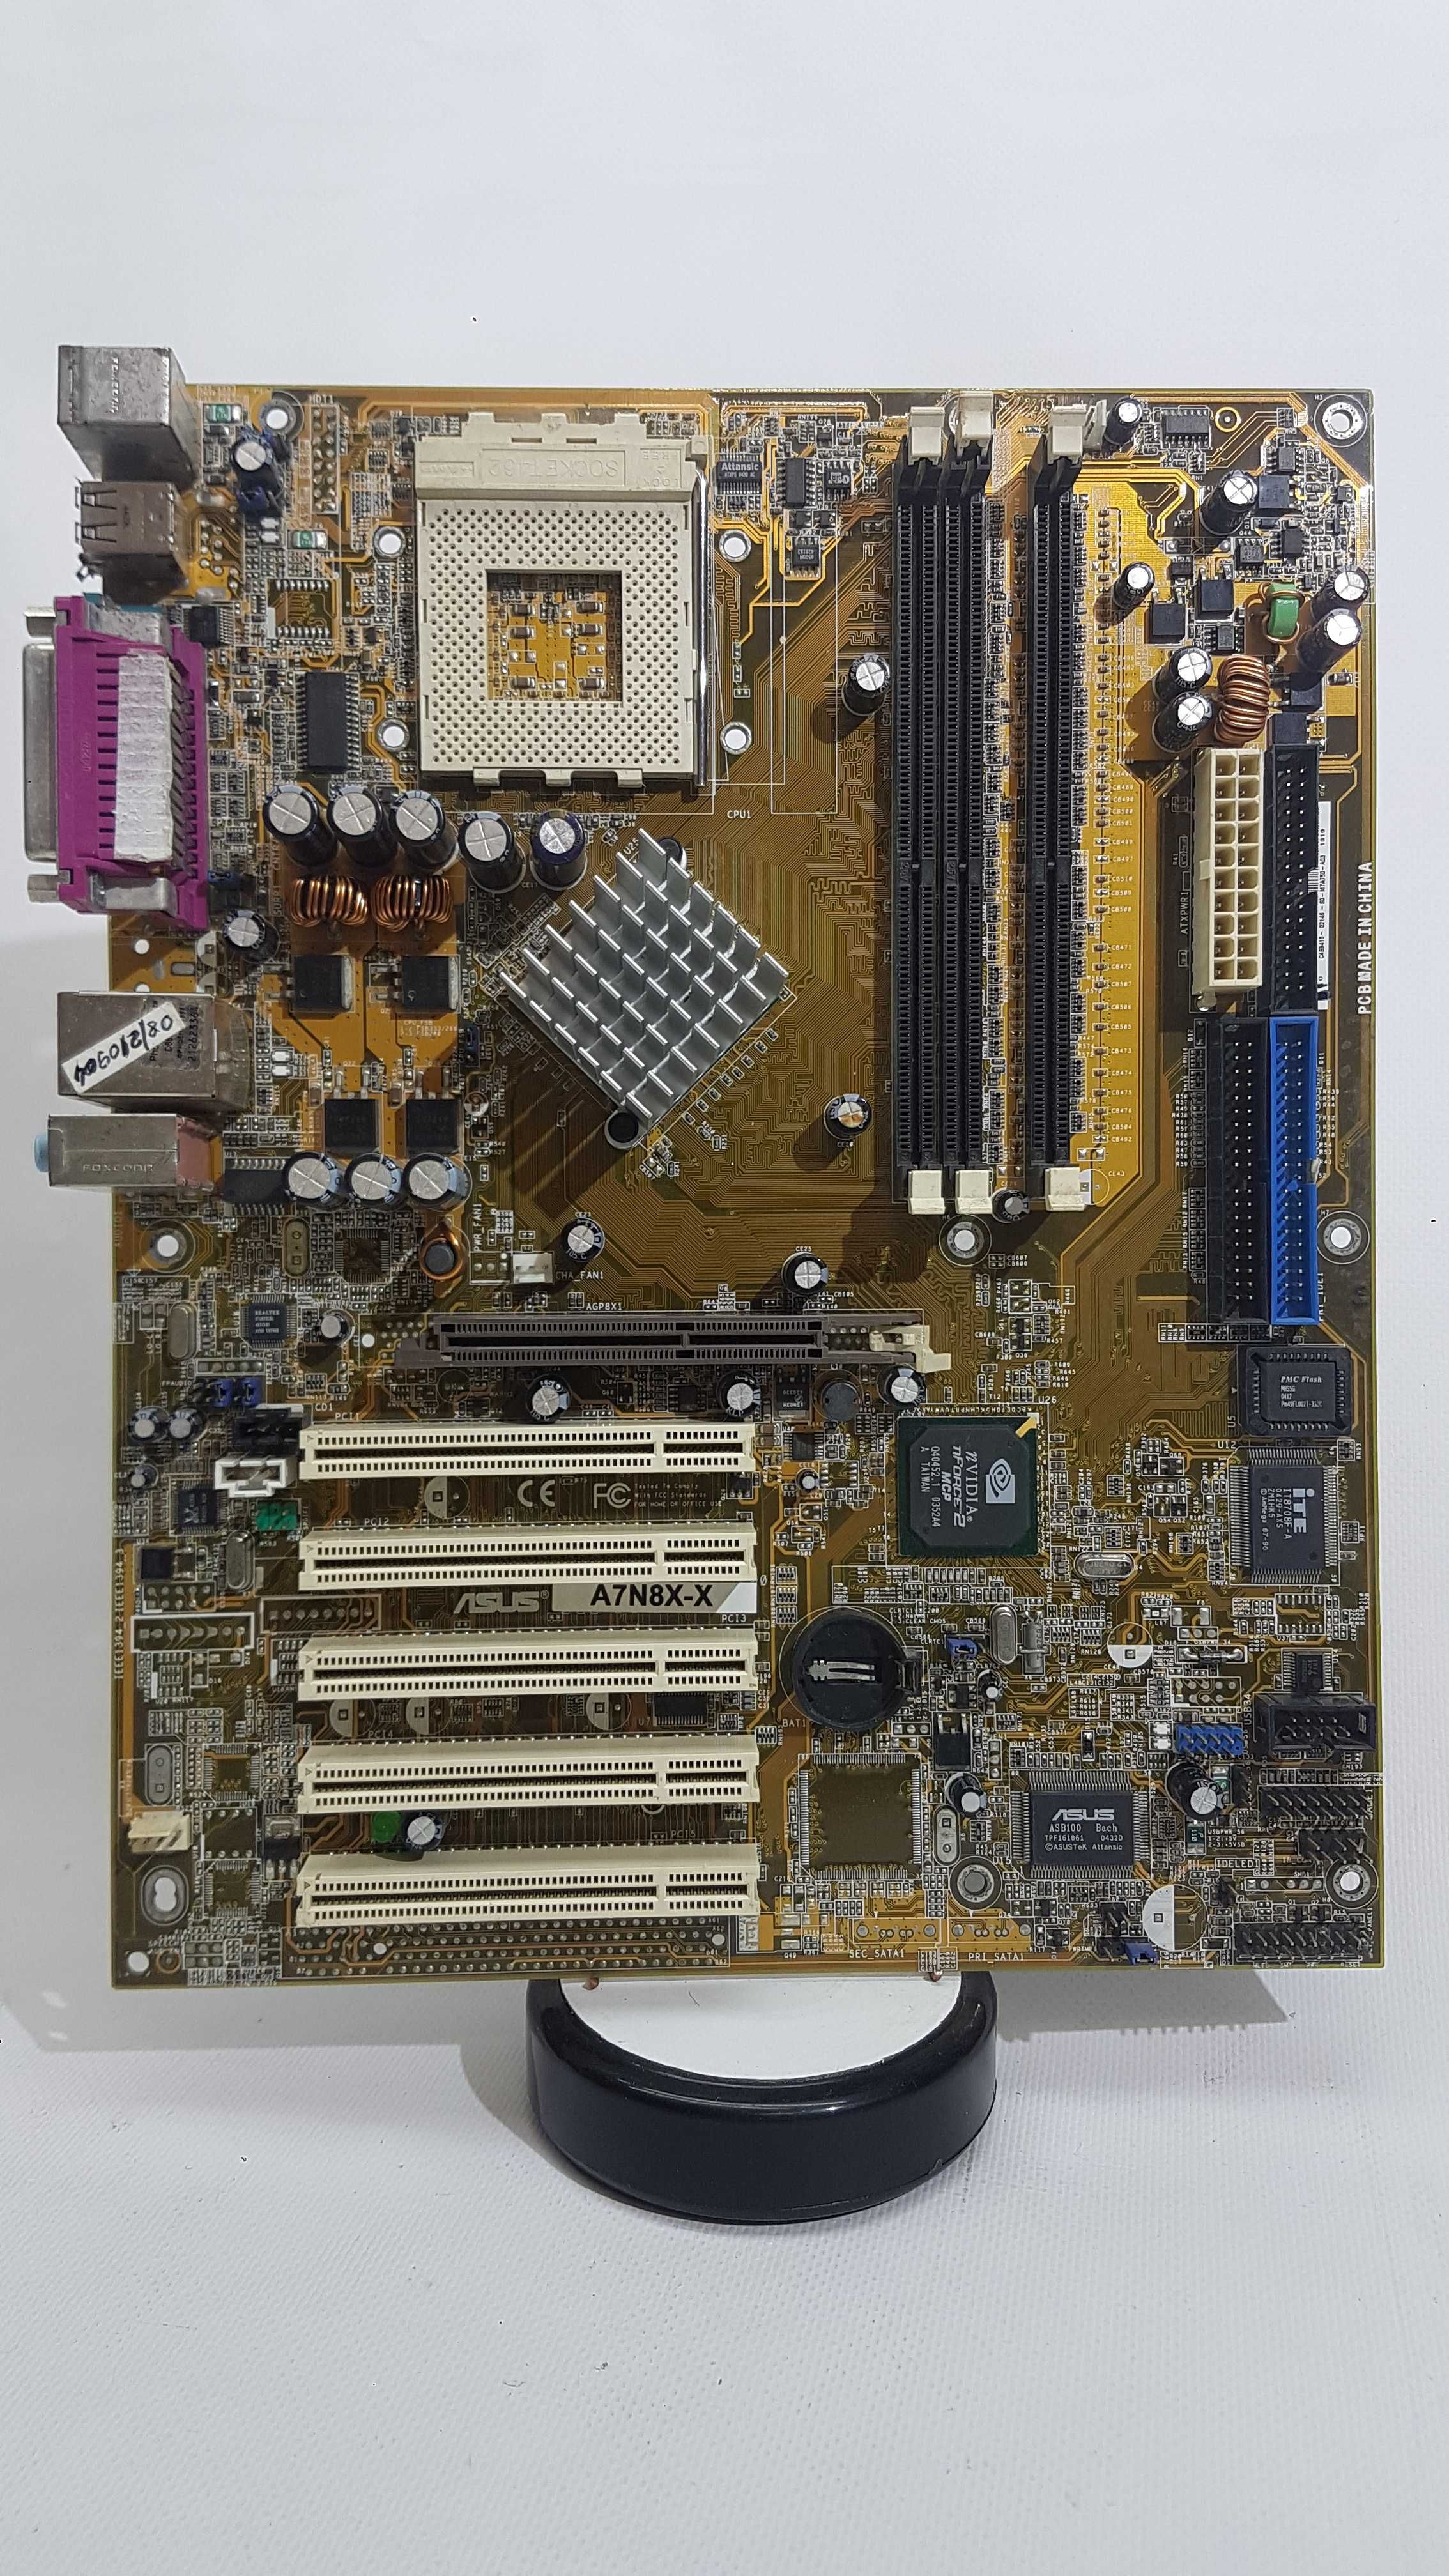 Placi retro computing socket 462 (A)